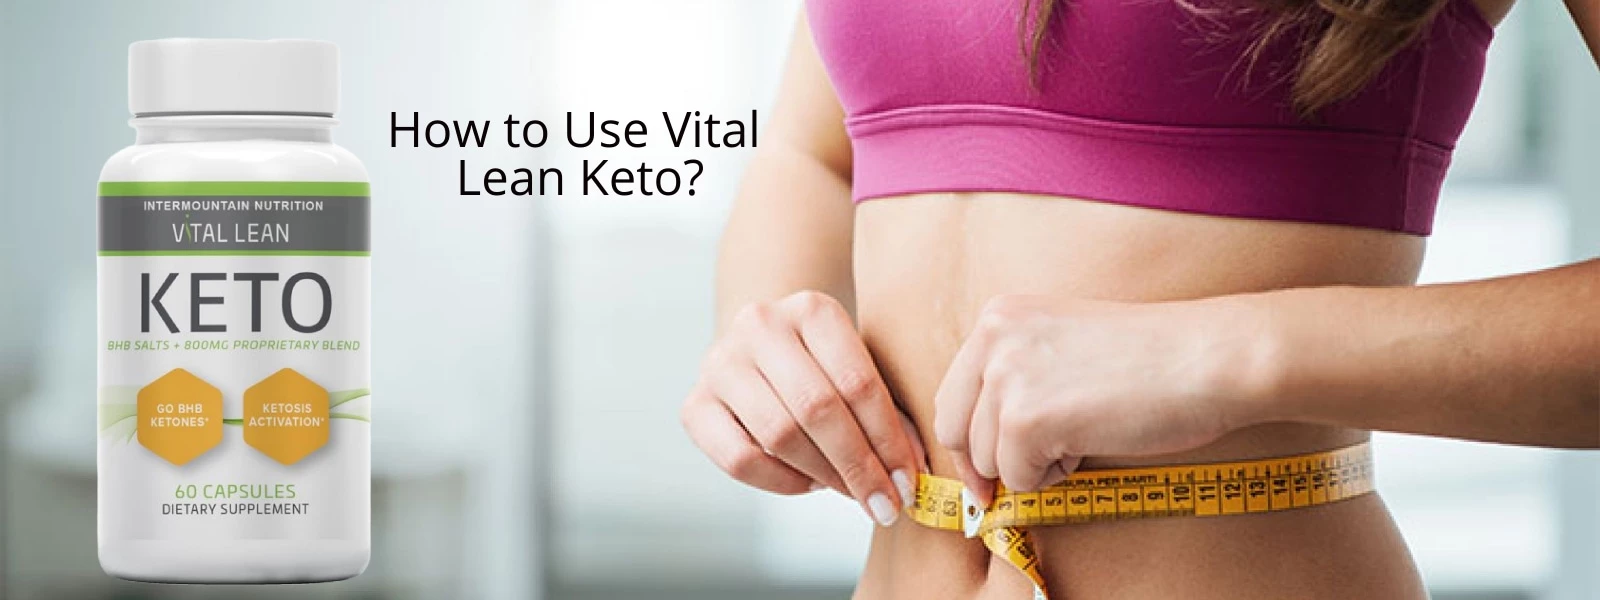 How to Use Vital Lean Keto?